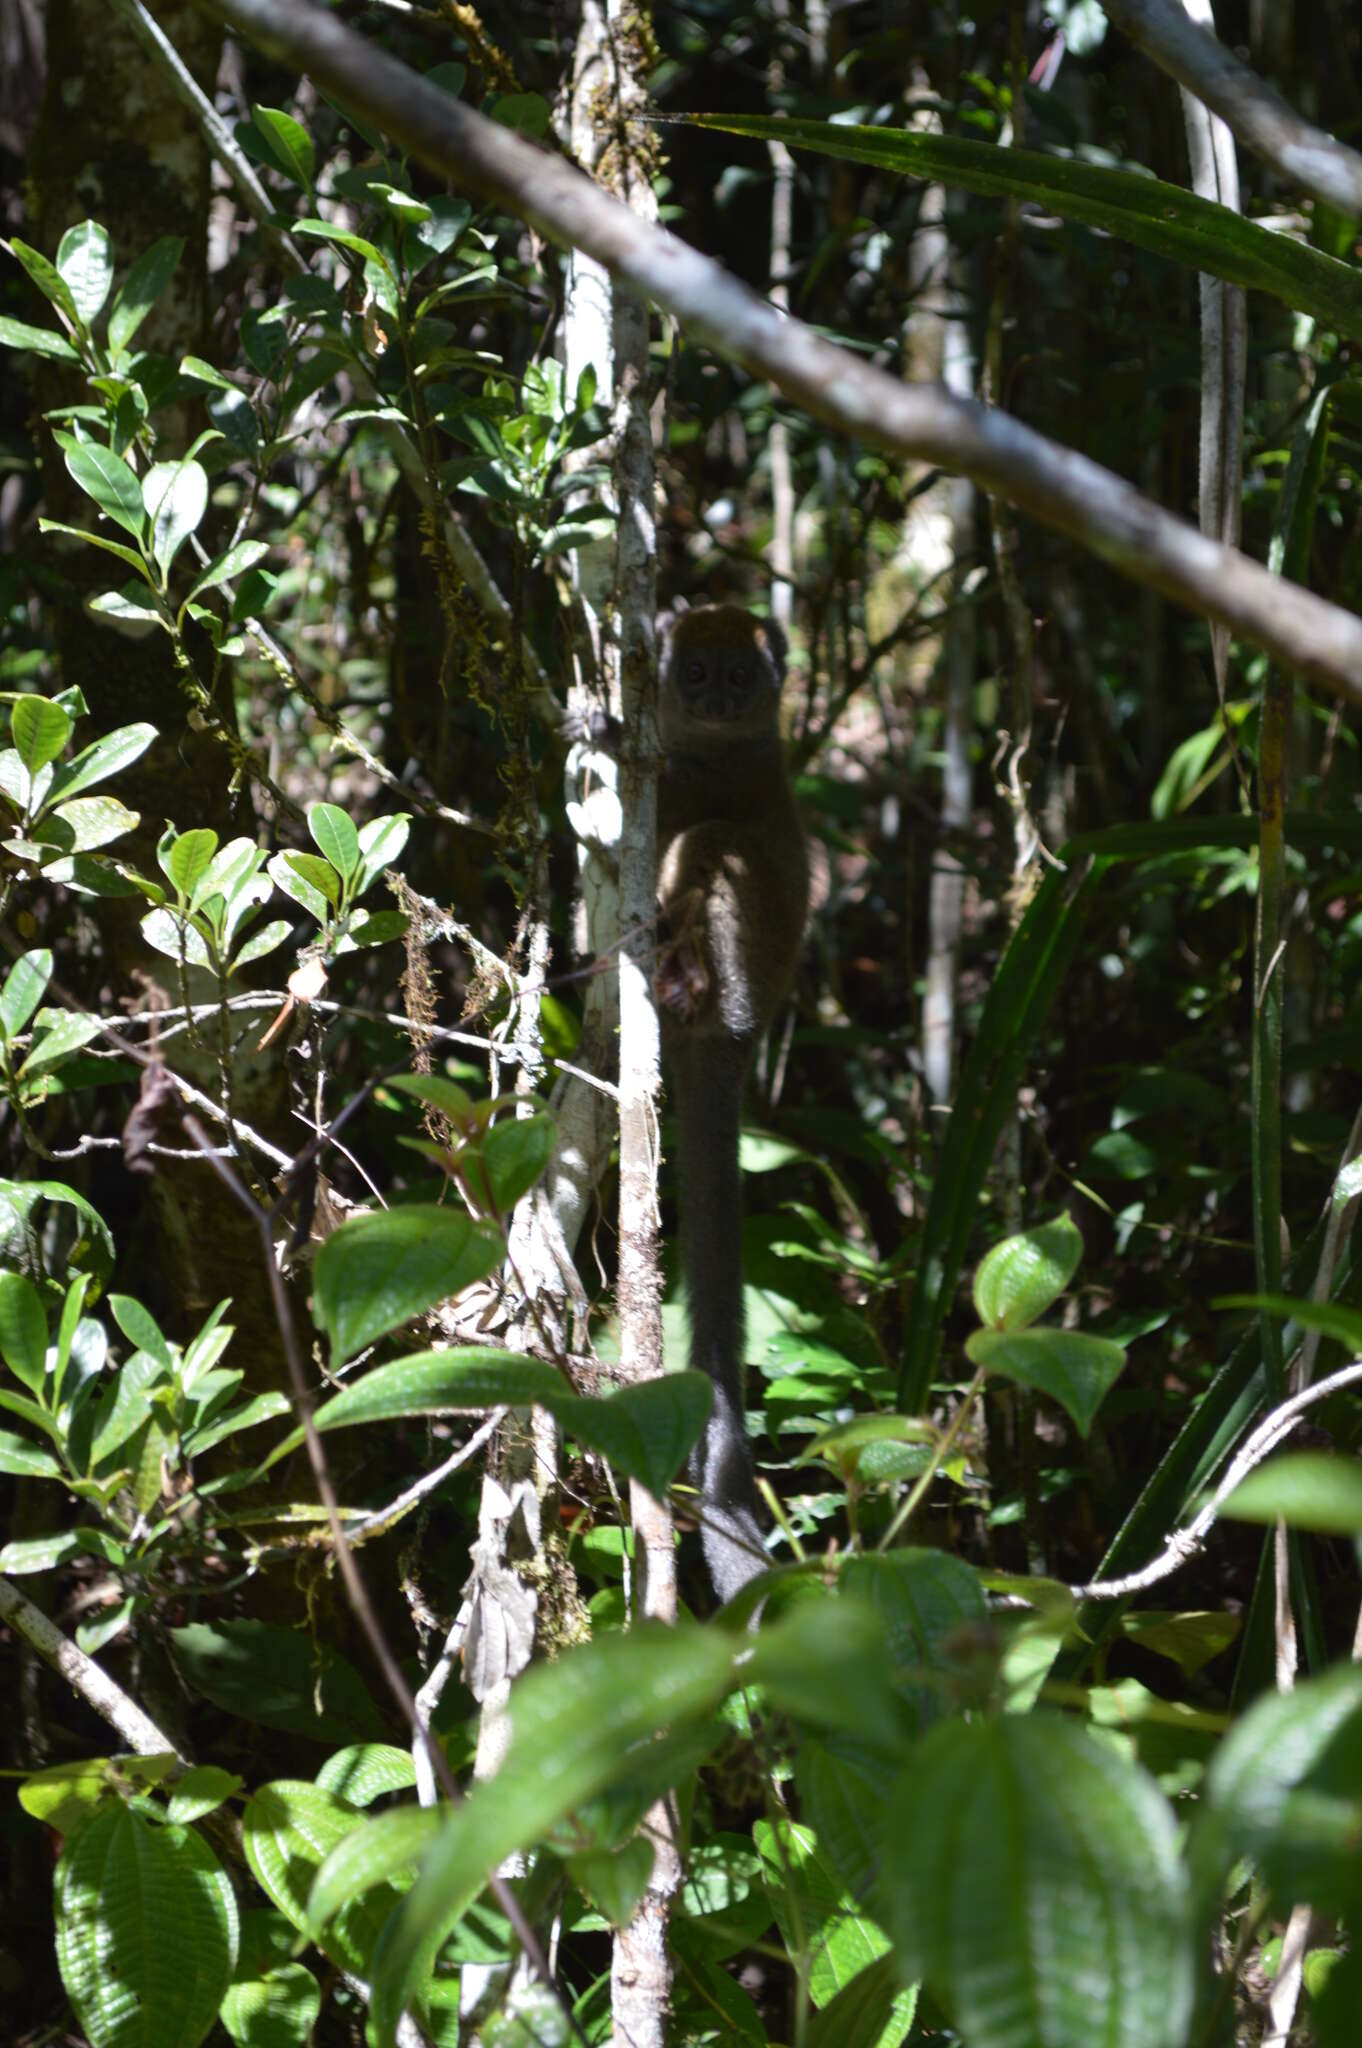 Image of Bamboo Lemur